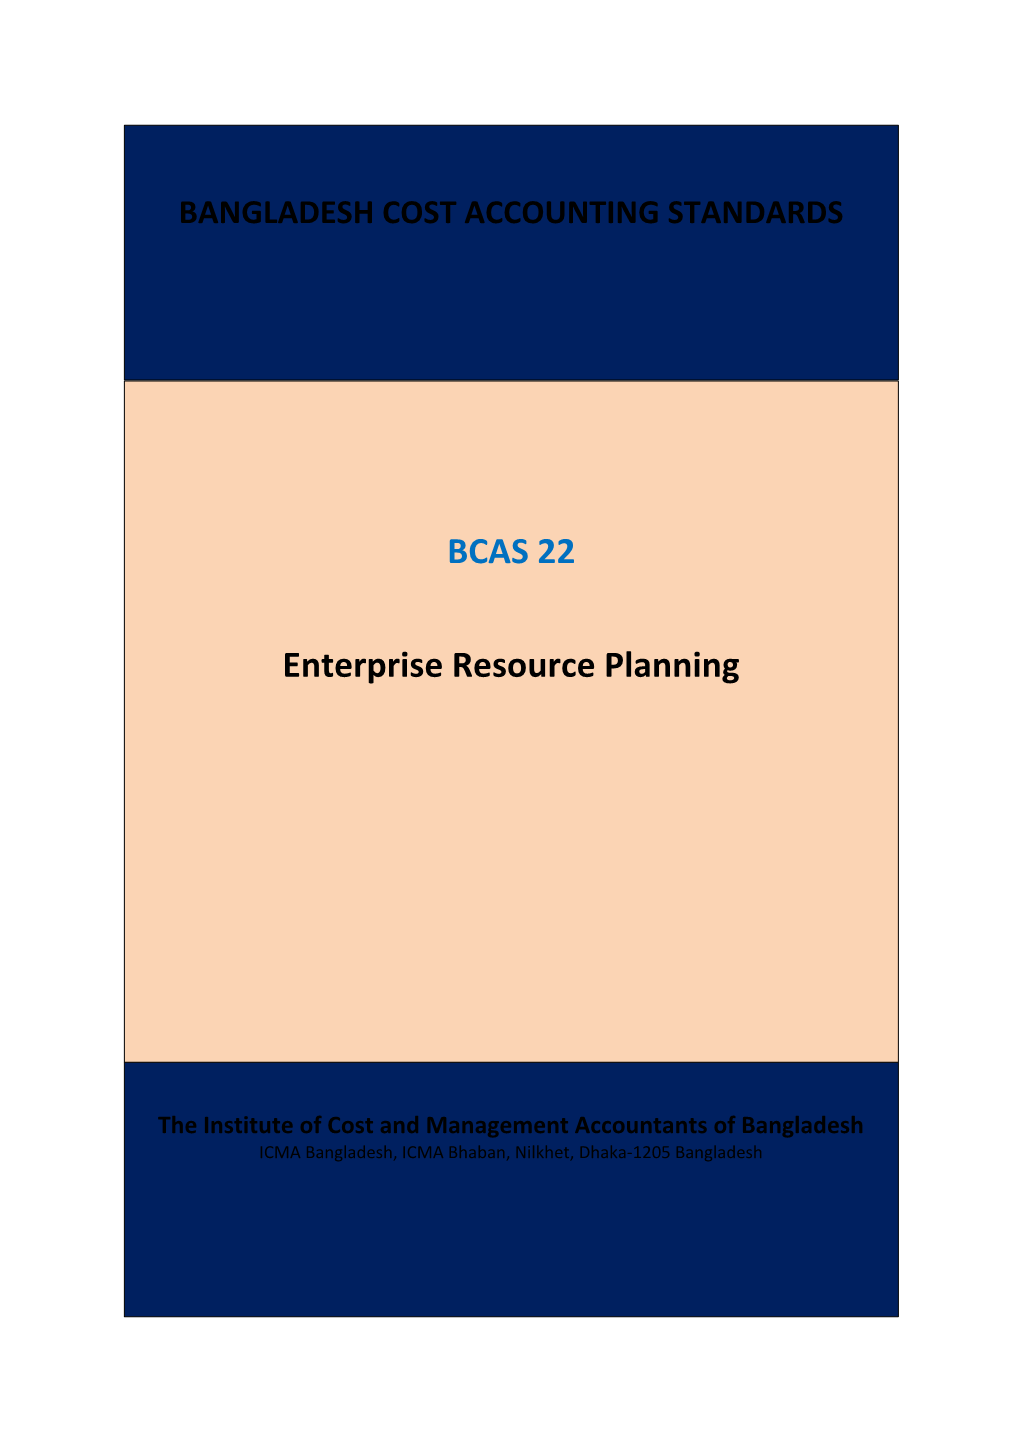 BACS 22: Enterprise Resource Planning